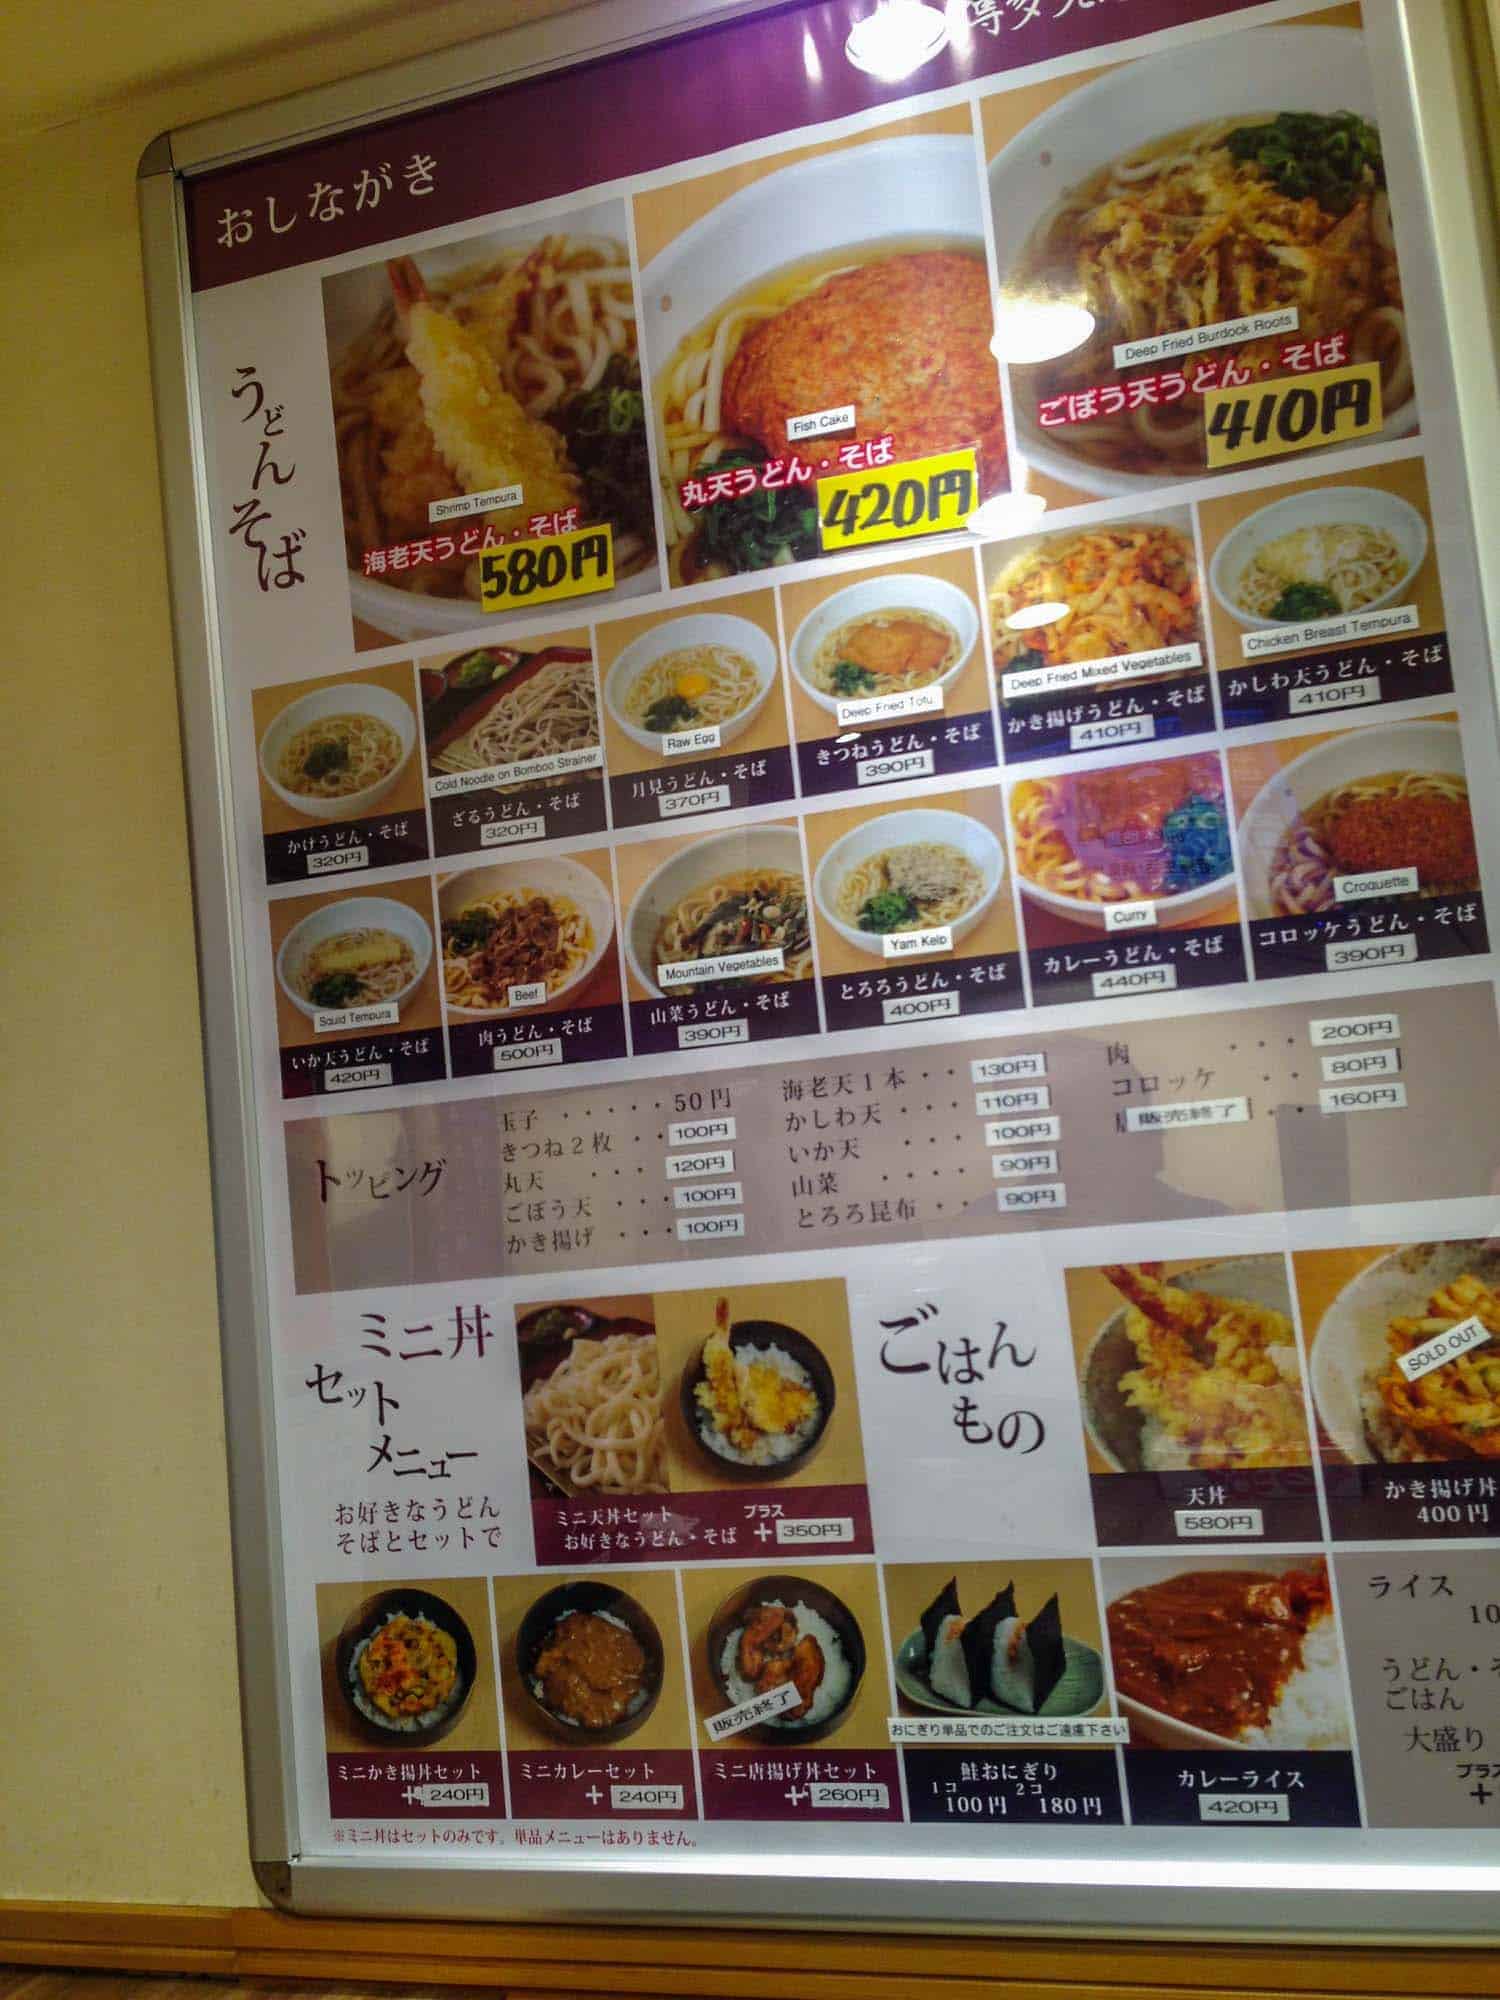 Menu for ordering food in Japan